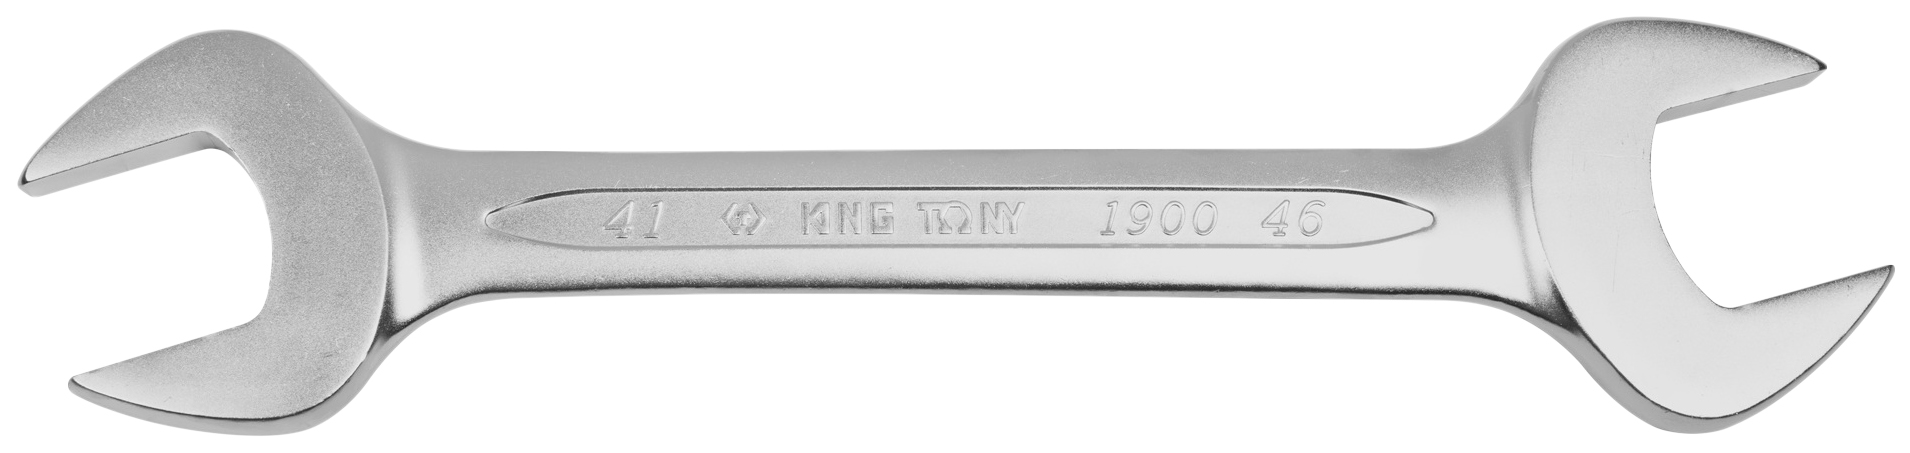 Рожковый ключ KING TONY 19004146 разрезной ключ king tony